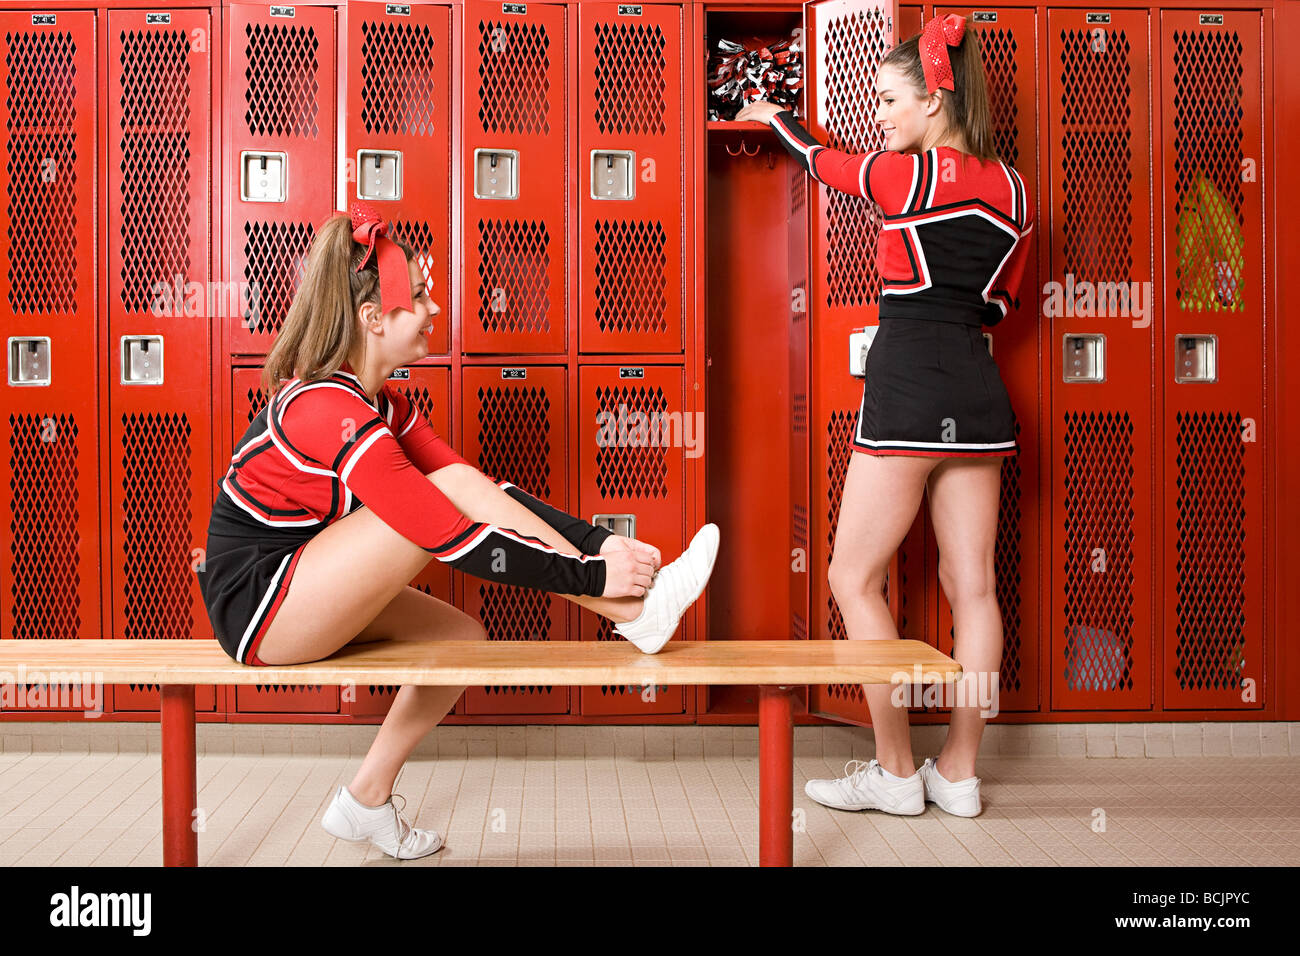 Cheerleaders in locker room Stock Photo